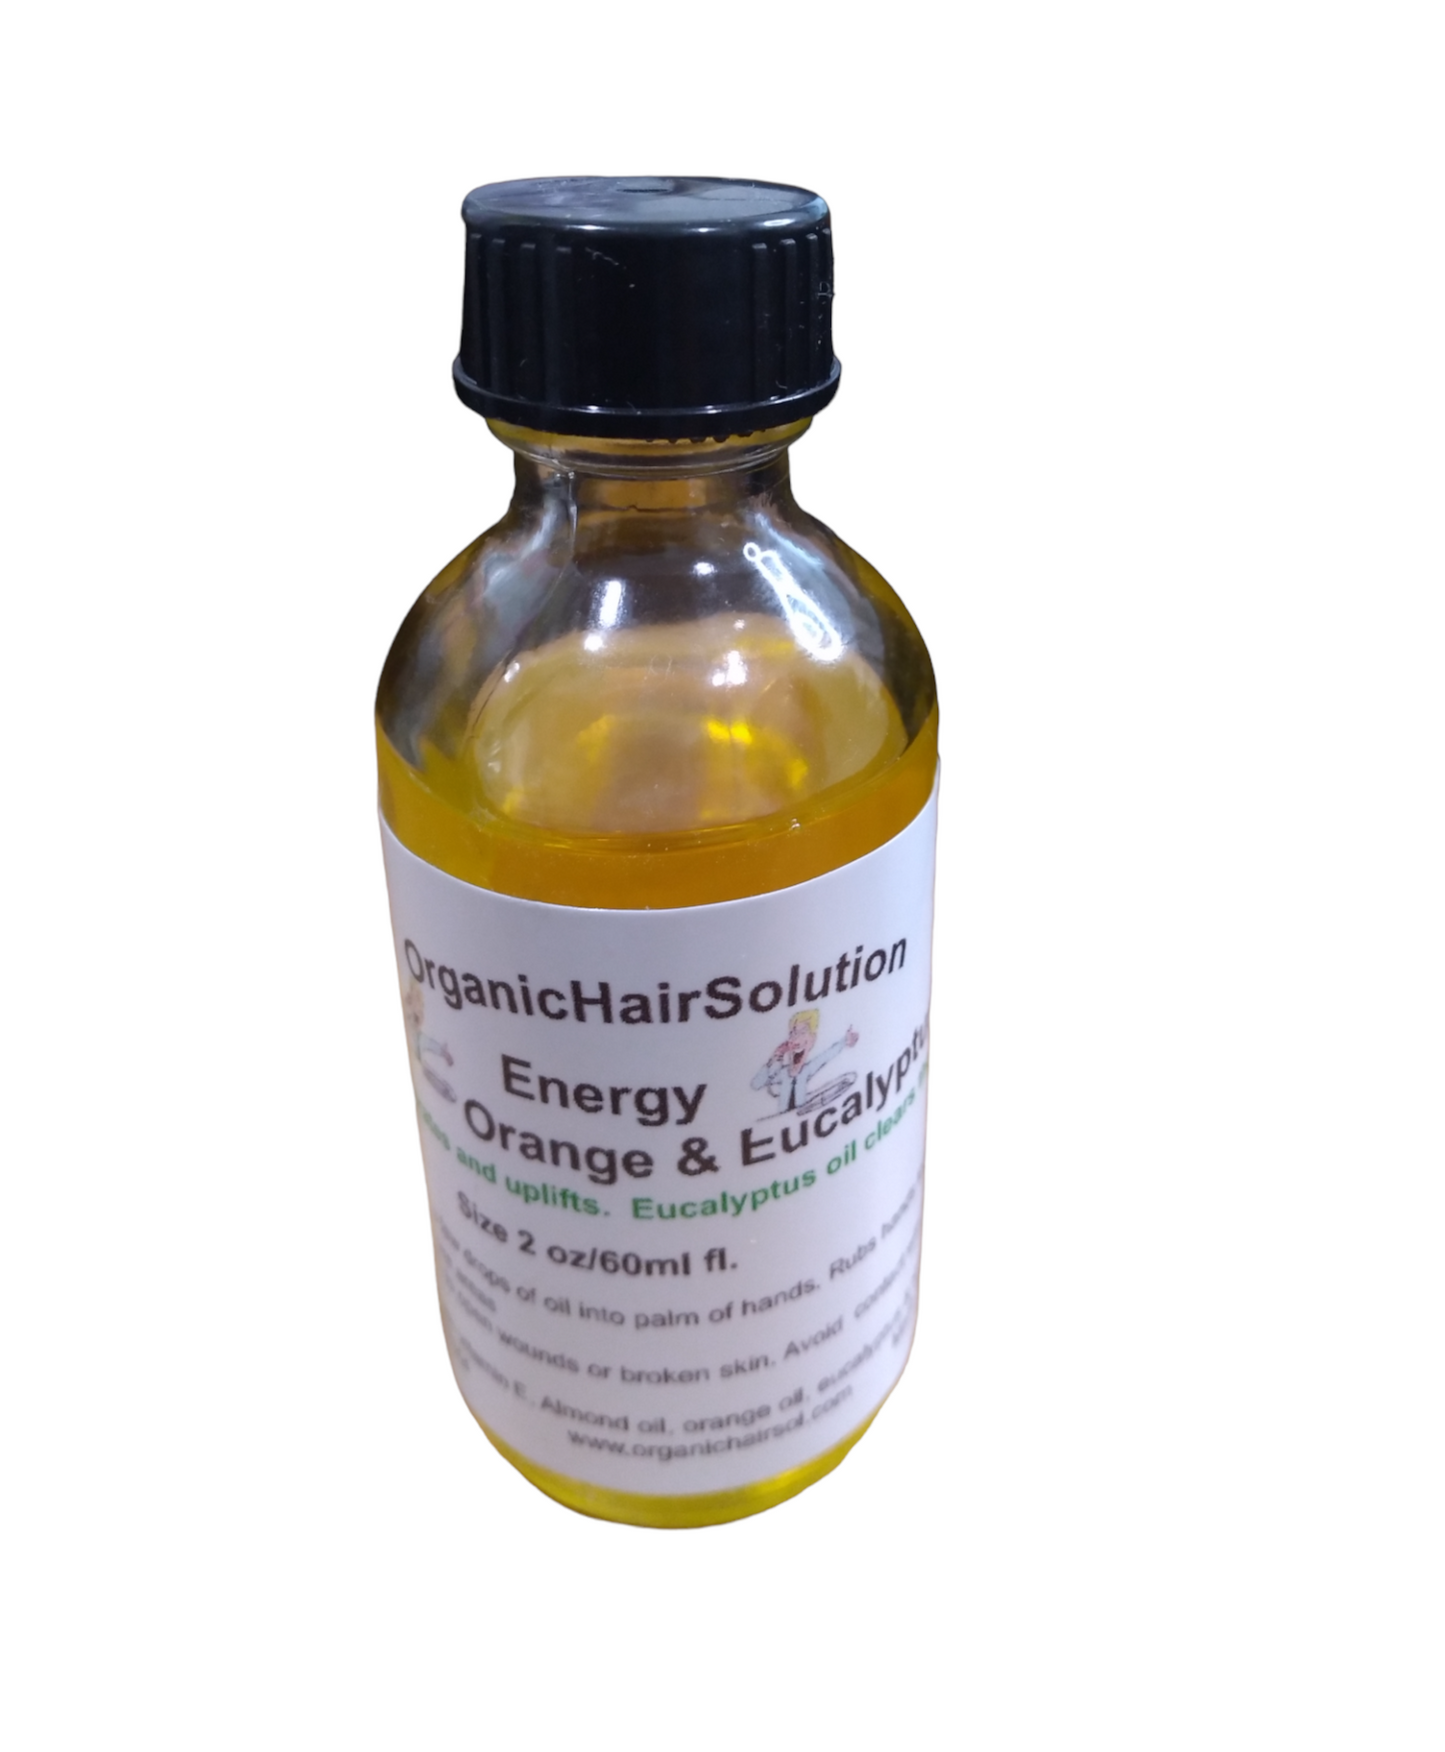 ENERGY WITH ORANGE &  EUCALYPTUS - Organic Hair Solution, LLC